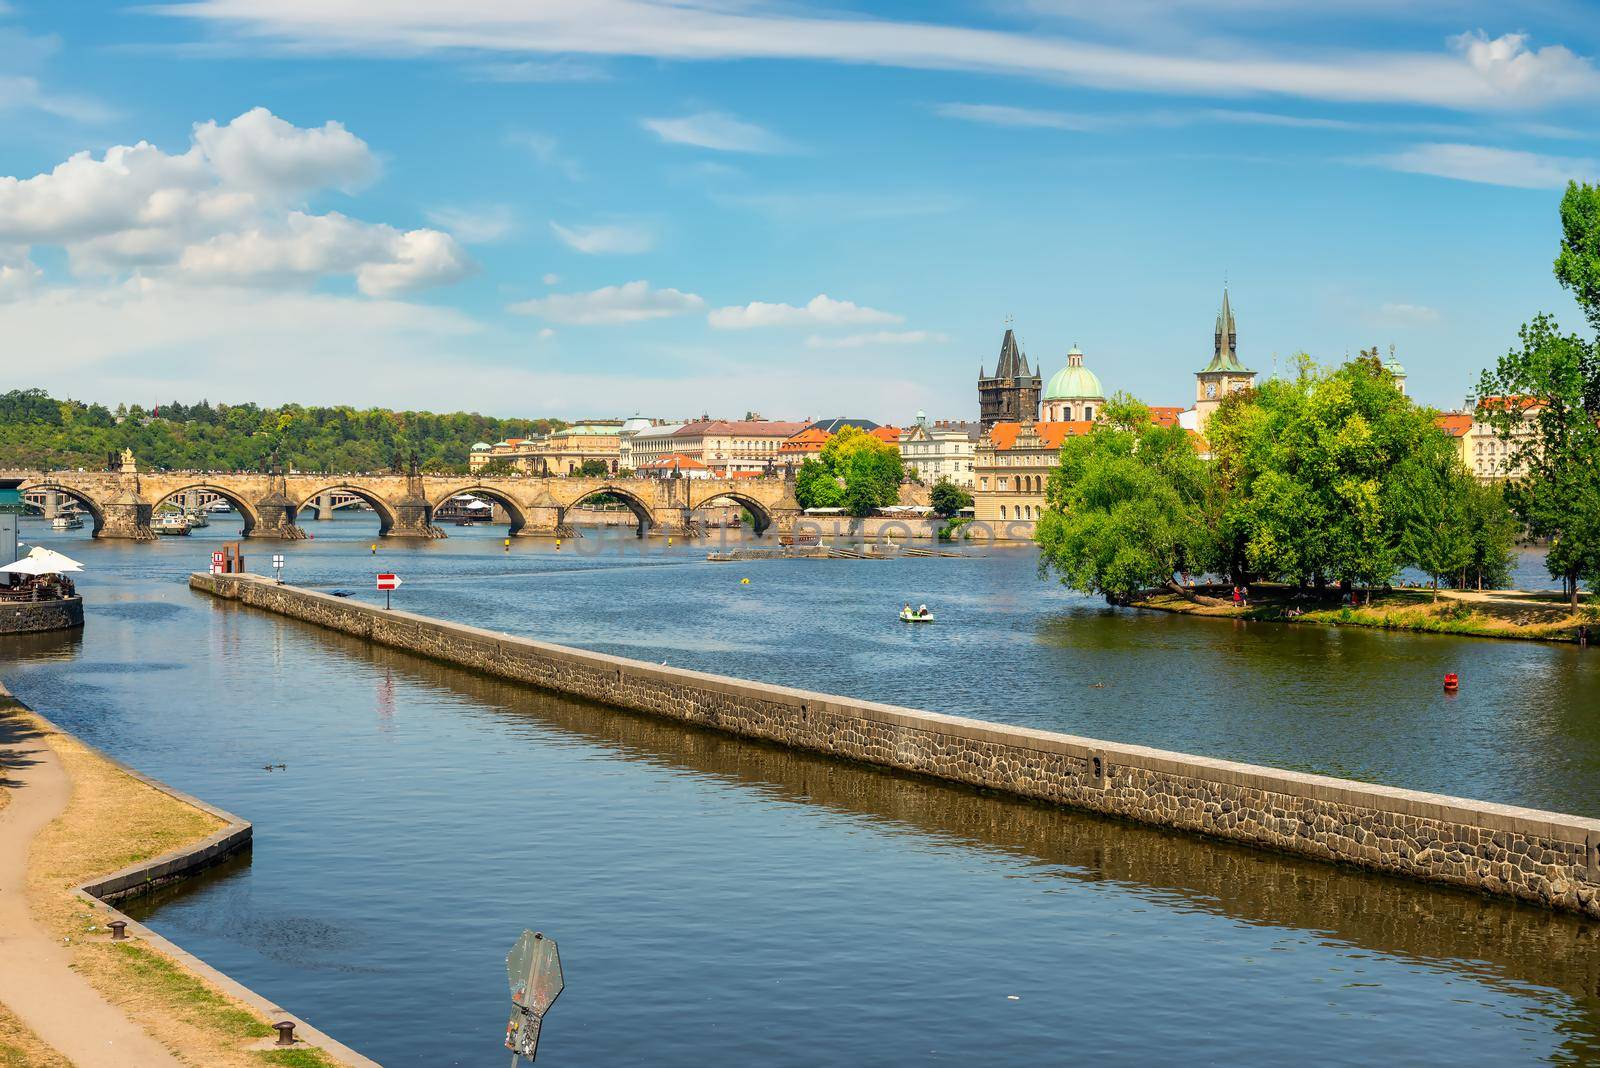 Vltava river and Charles bridge in Prague